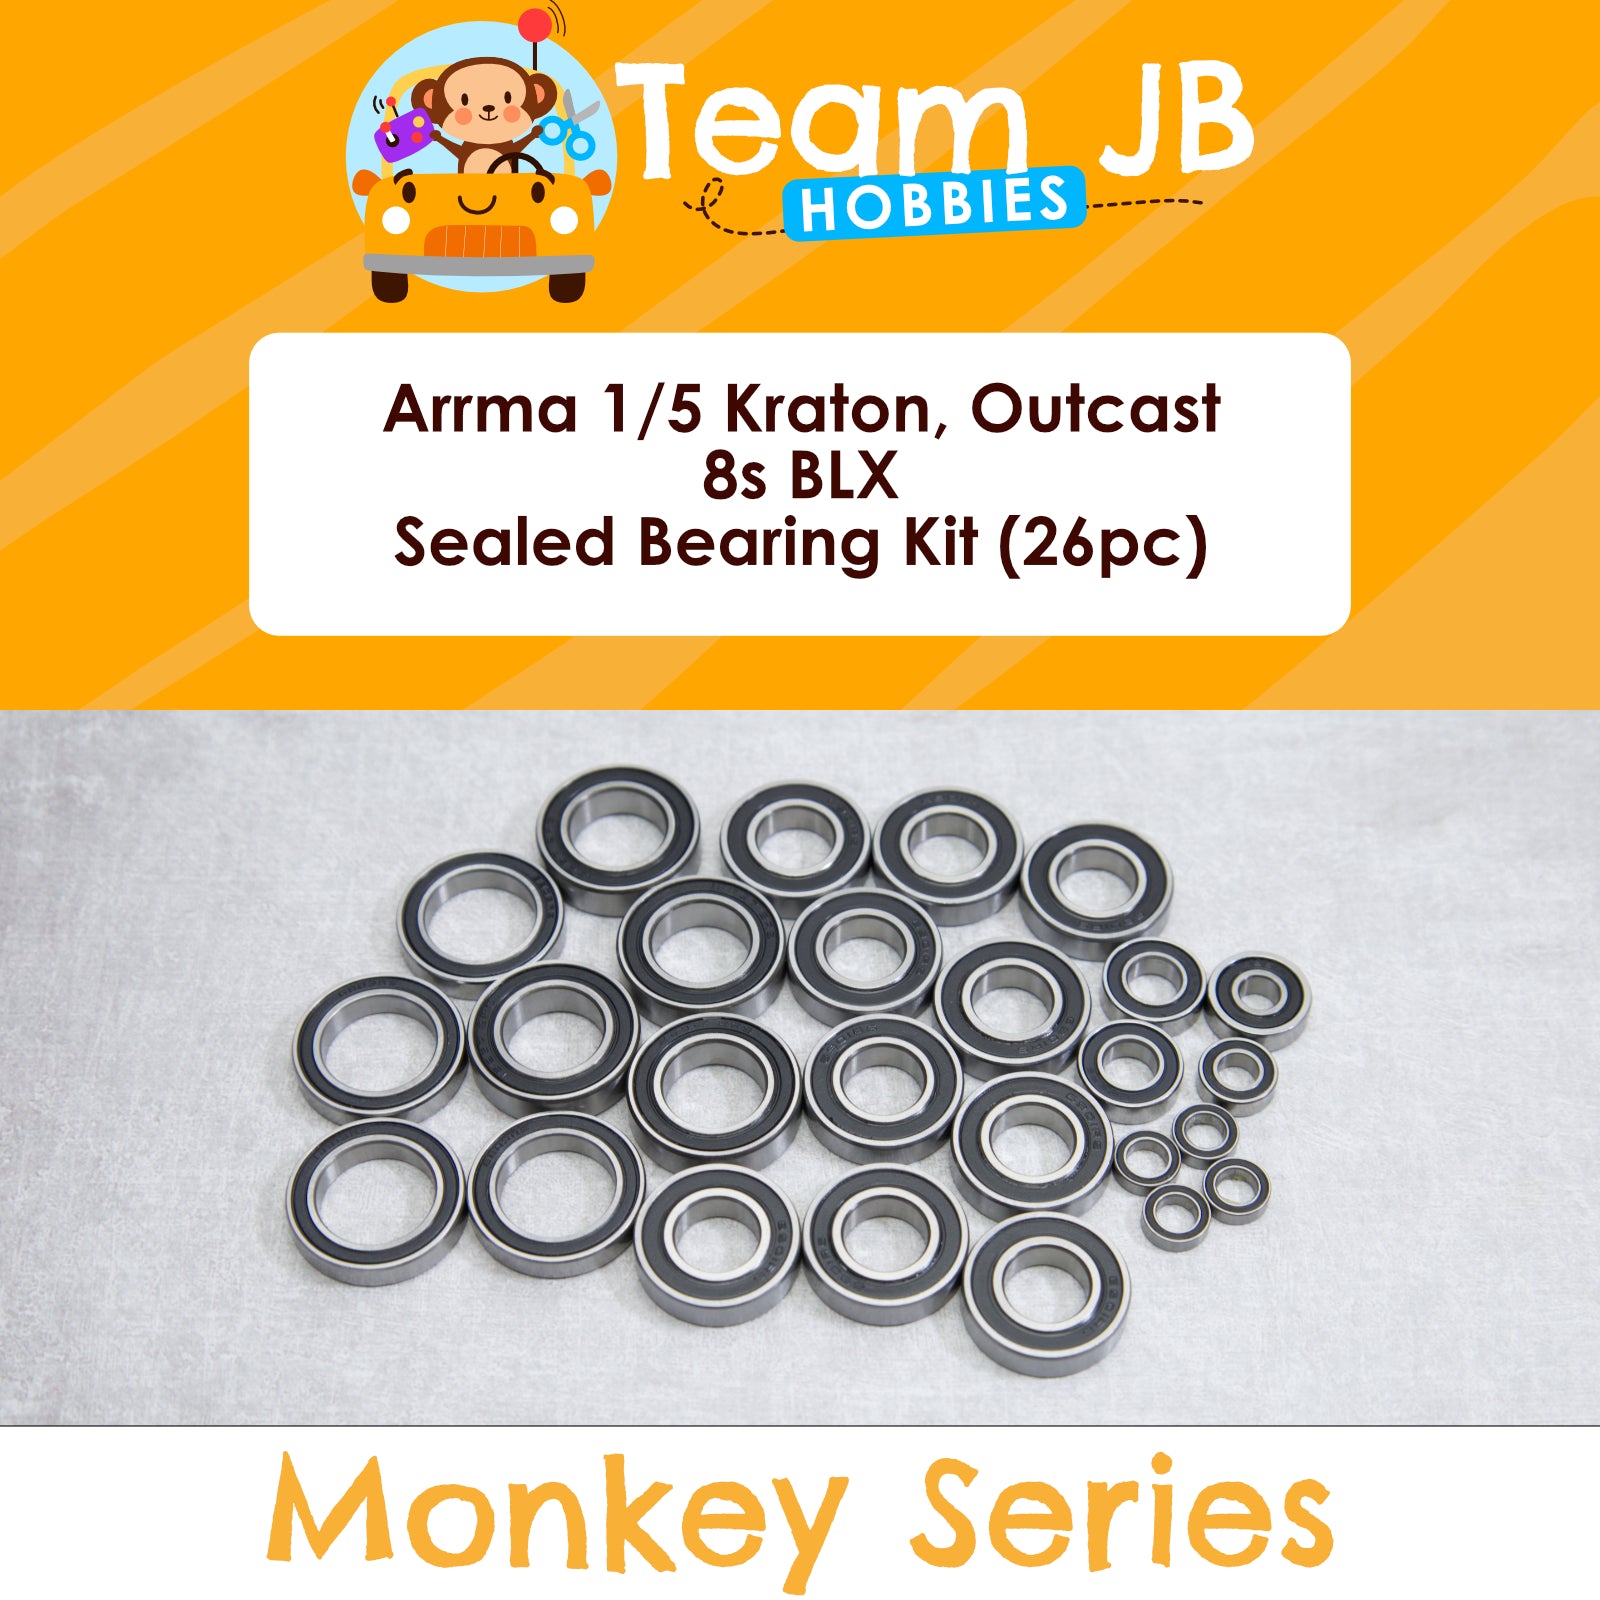 Arrma 1/5 Kraton, Outcast - 8s BLX Sealed Bearing Kit